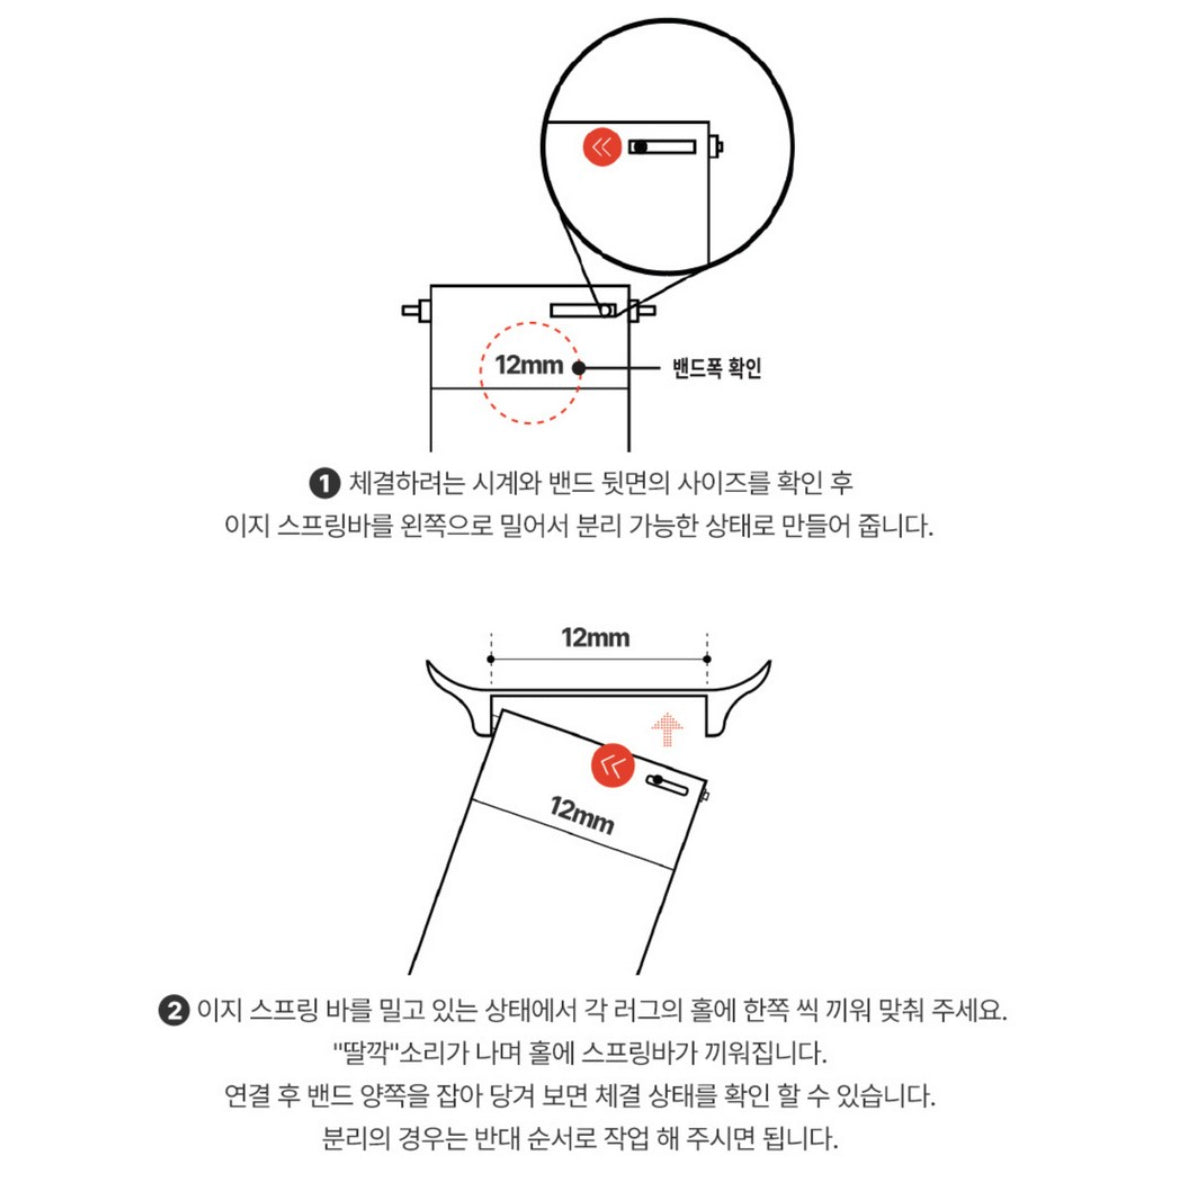 J.ESTINA Nuovo Tempo Watch Gold Cream Colour Leather Watch IU Pick Analog Made in Korea / from Seoul, Korea